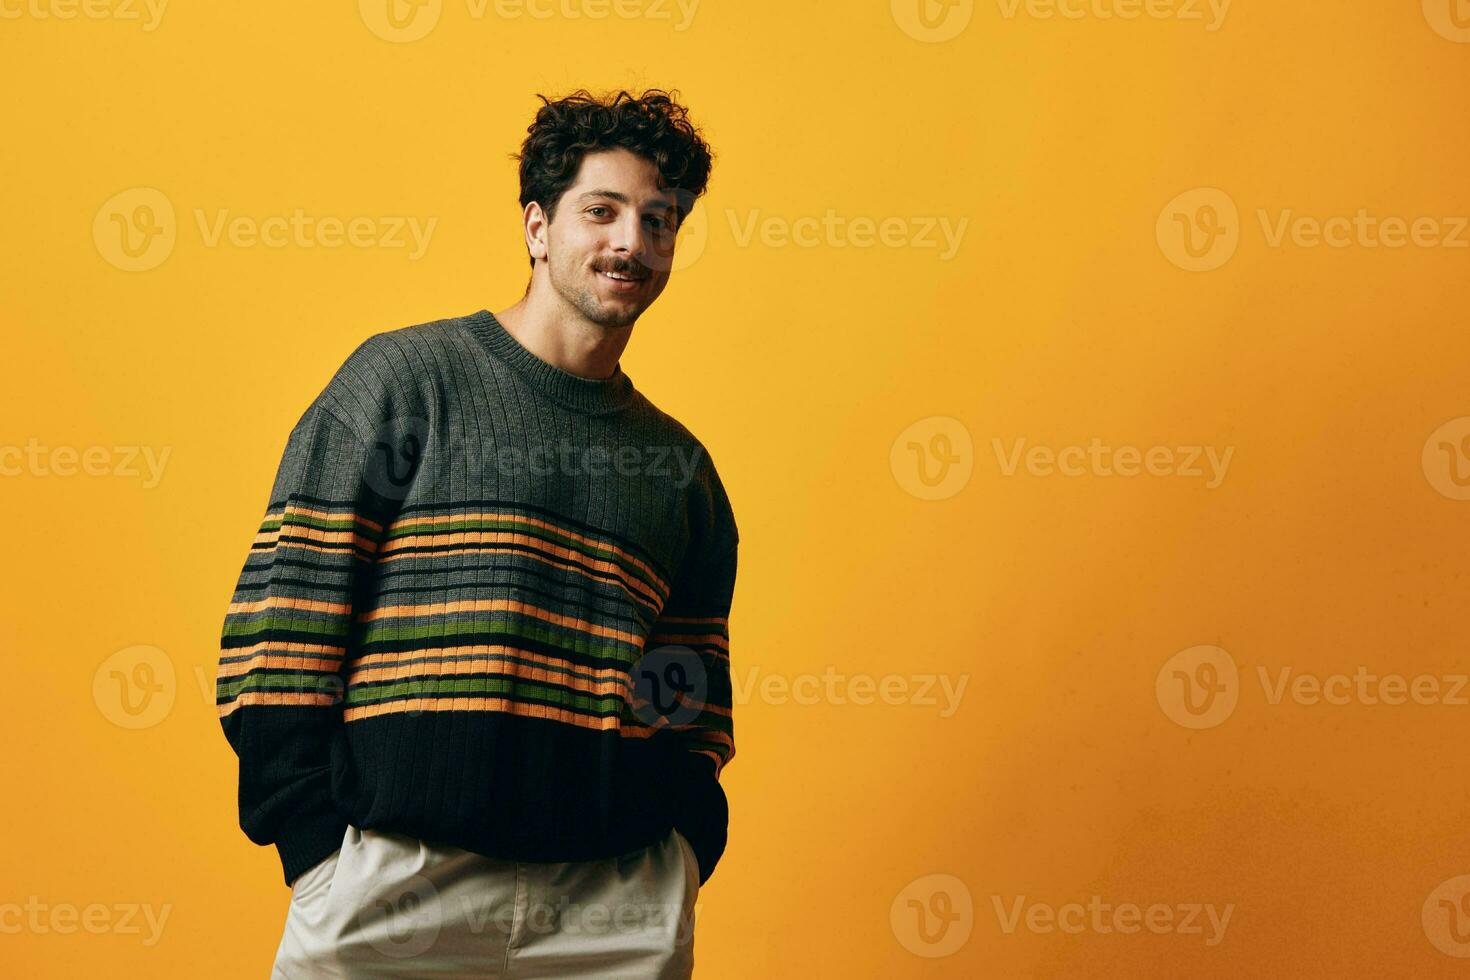 Man background orange happy trendy sweater portrait smile fashion photo